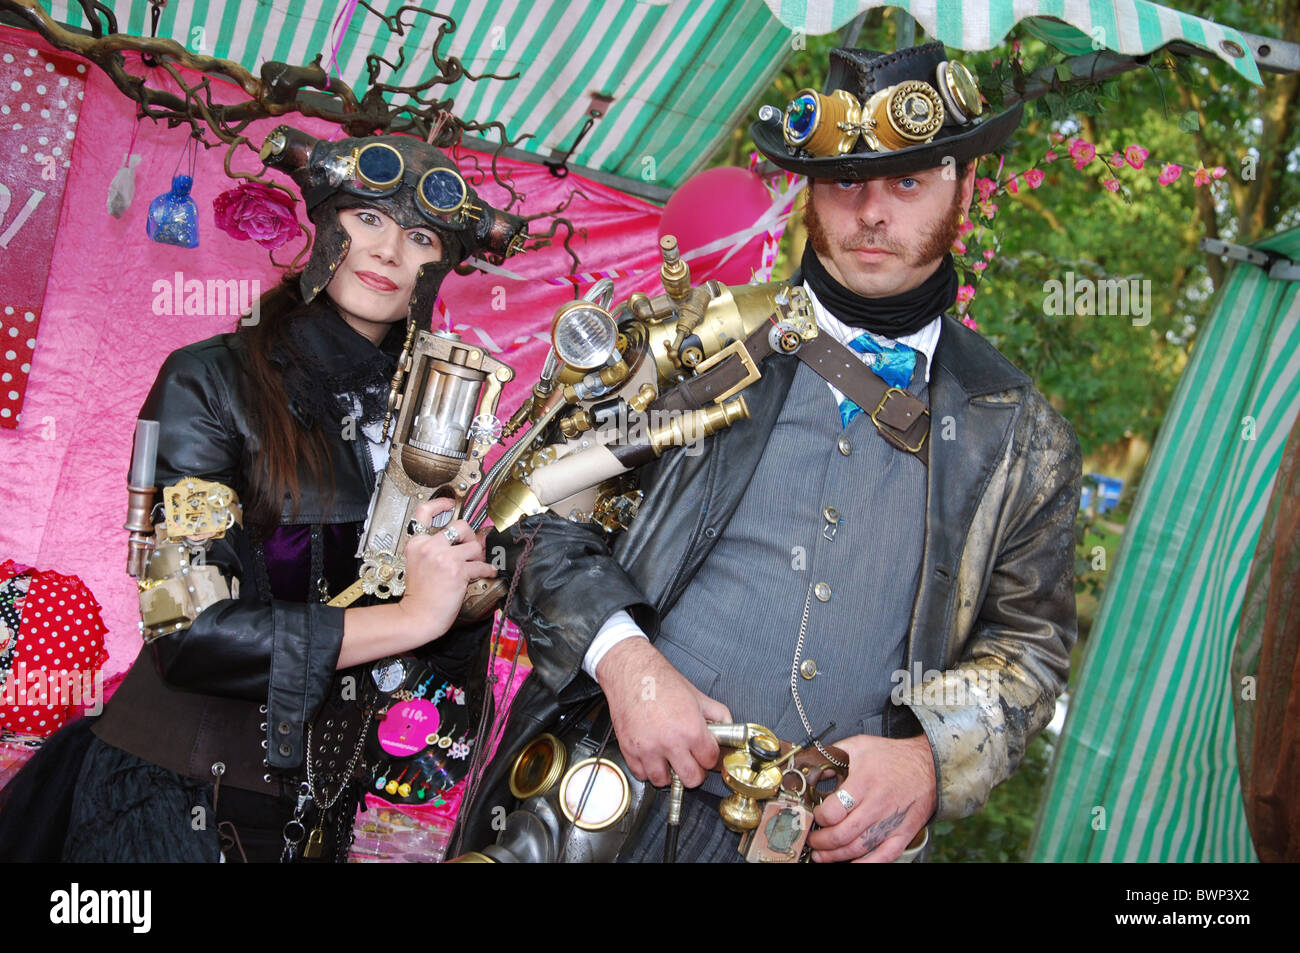 steampunk couple at 2010 Fantasy Fair Arcen Netherlands Stock Photo